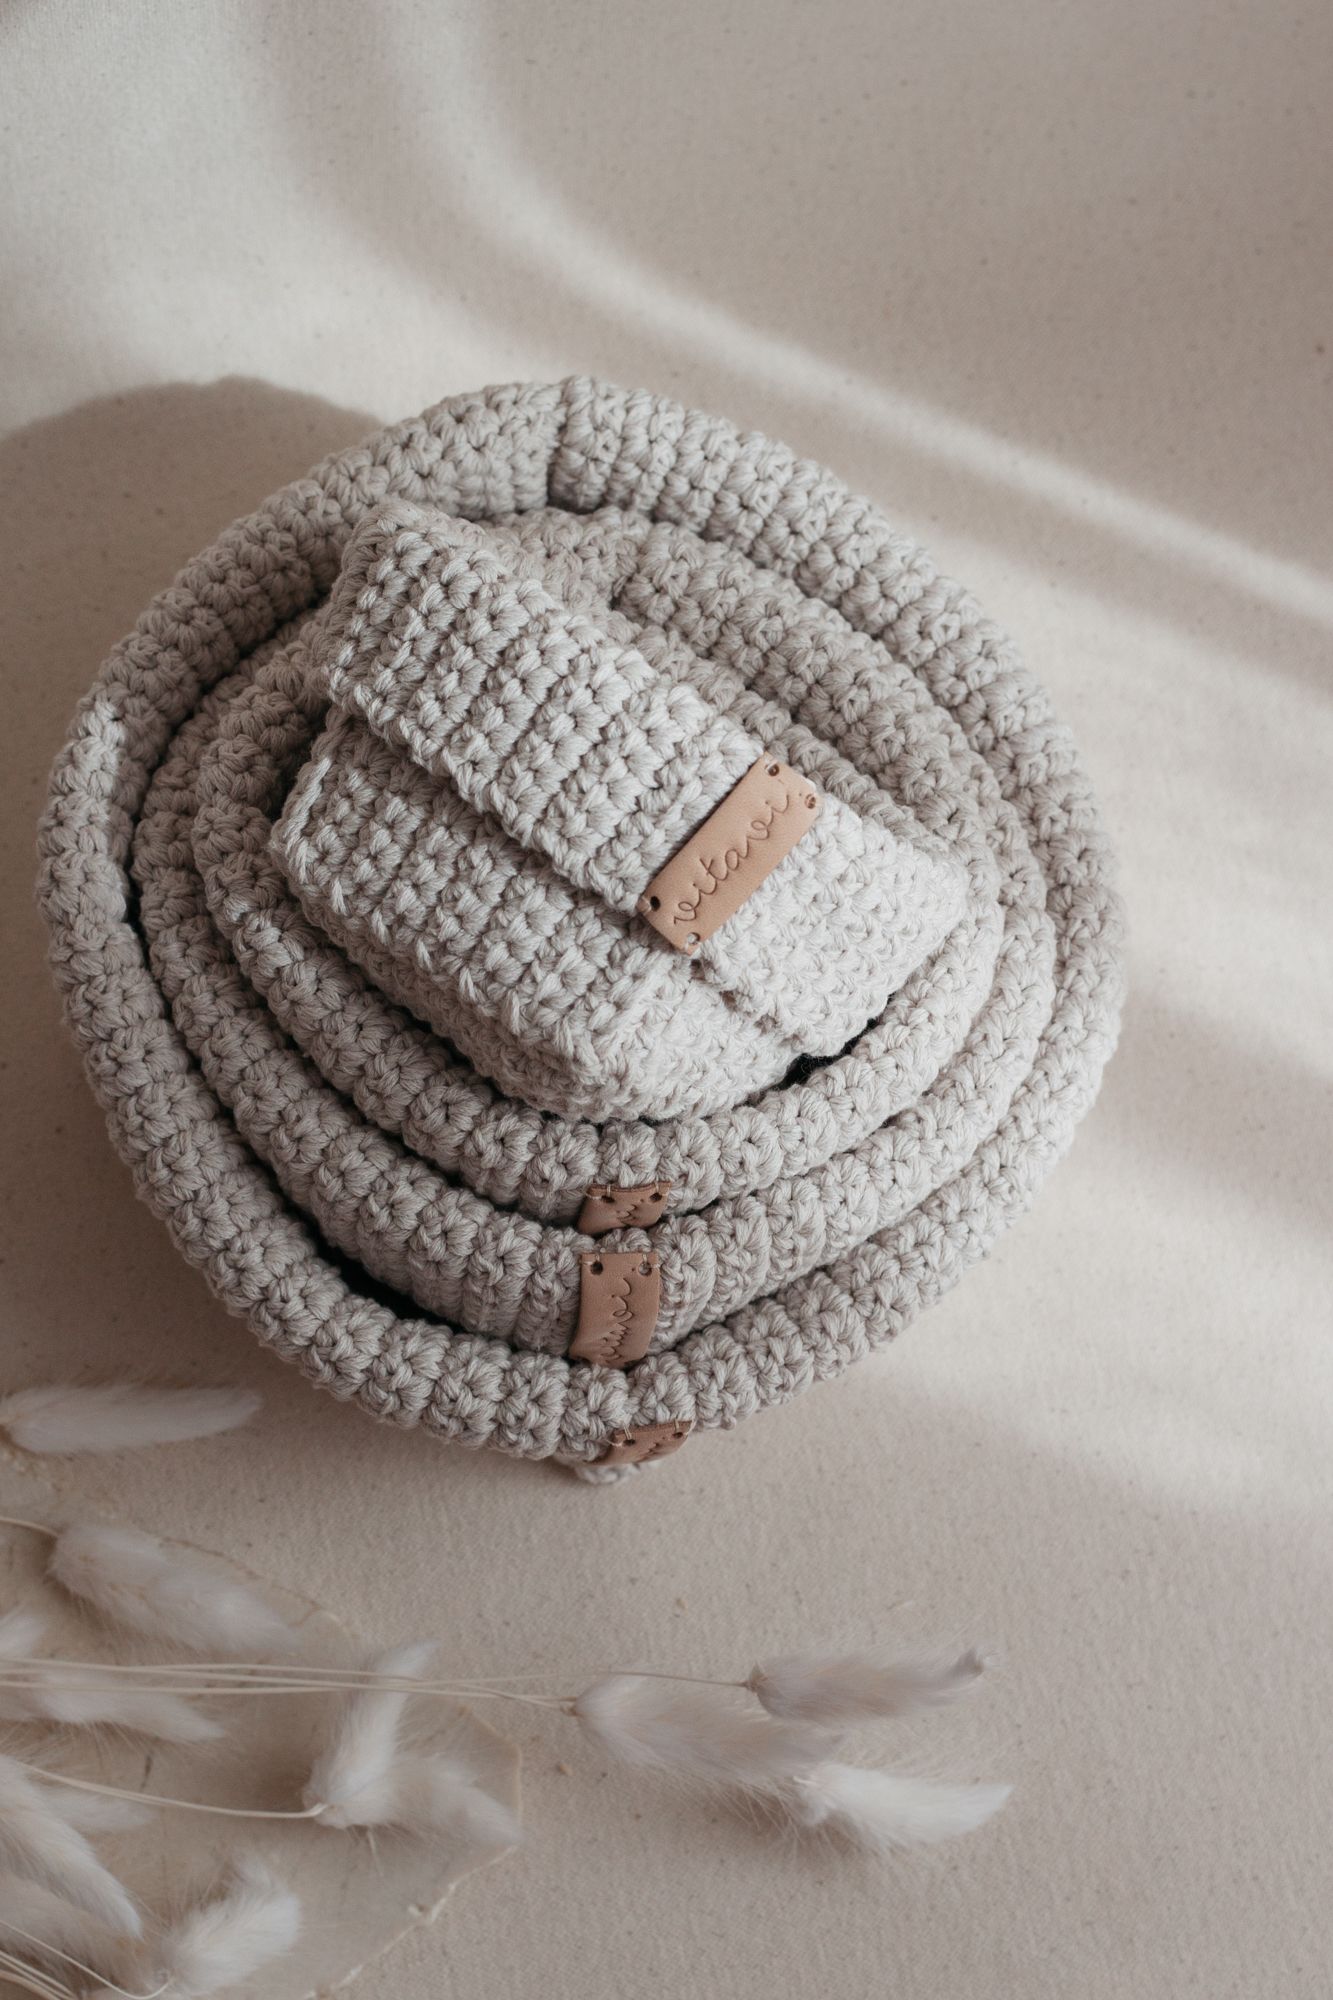 Set of 4 Crochet Baskets - Cream